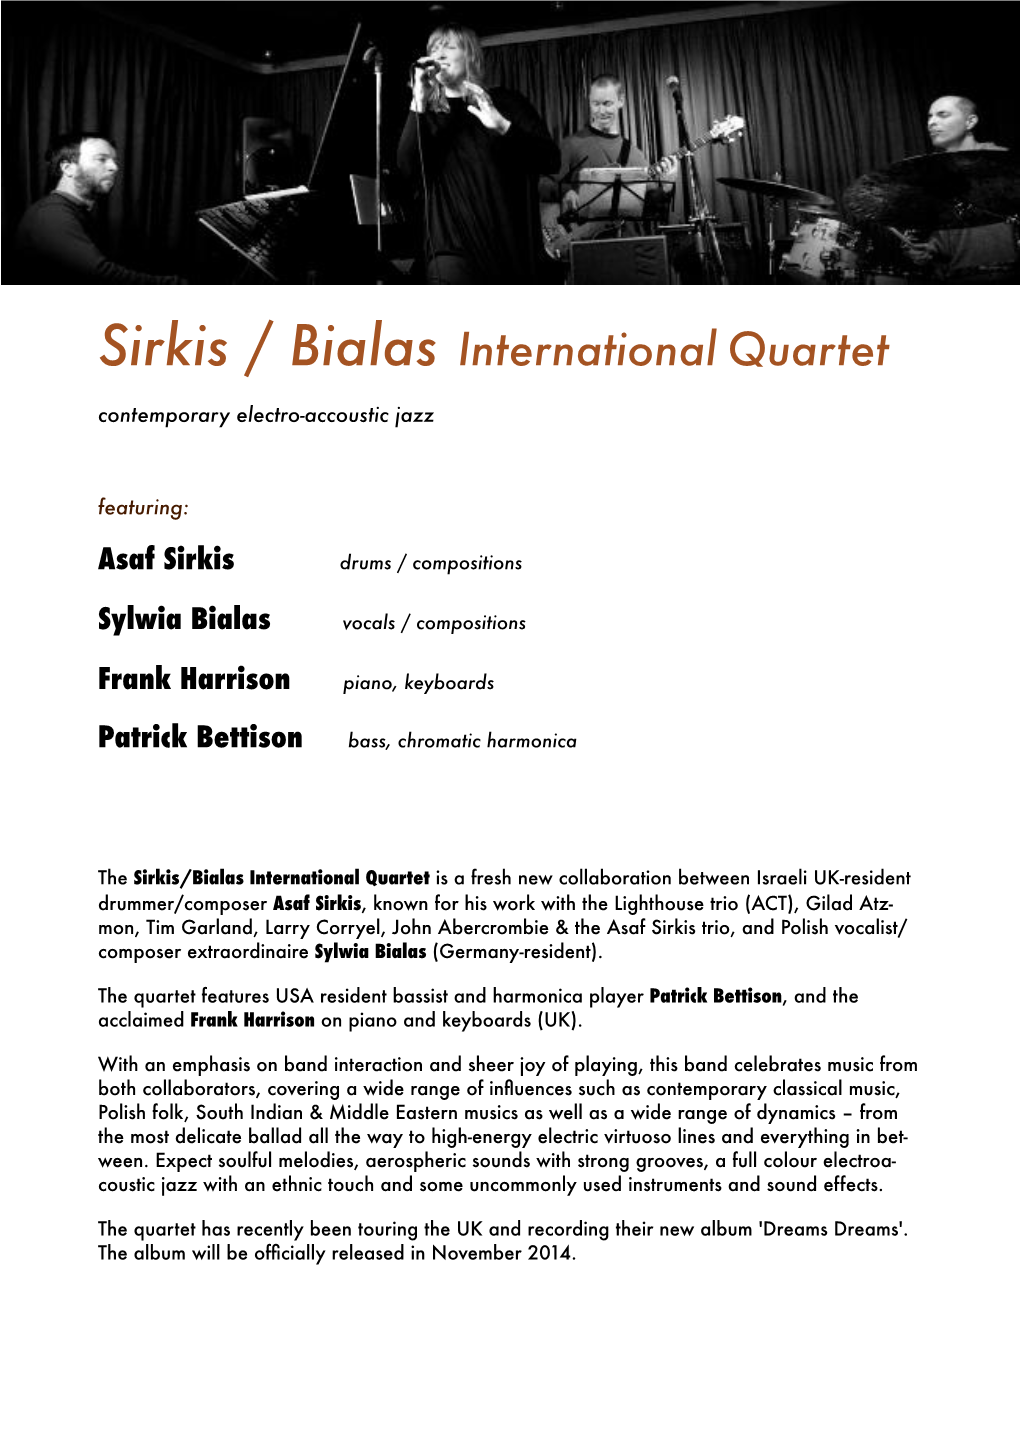 Sirkis / Bialas International Quartet Contemporary Electro-Accoustic Jazz